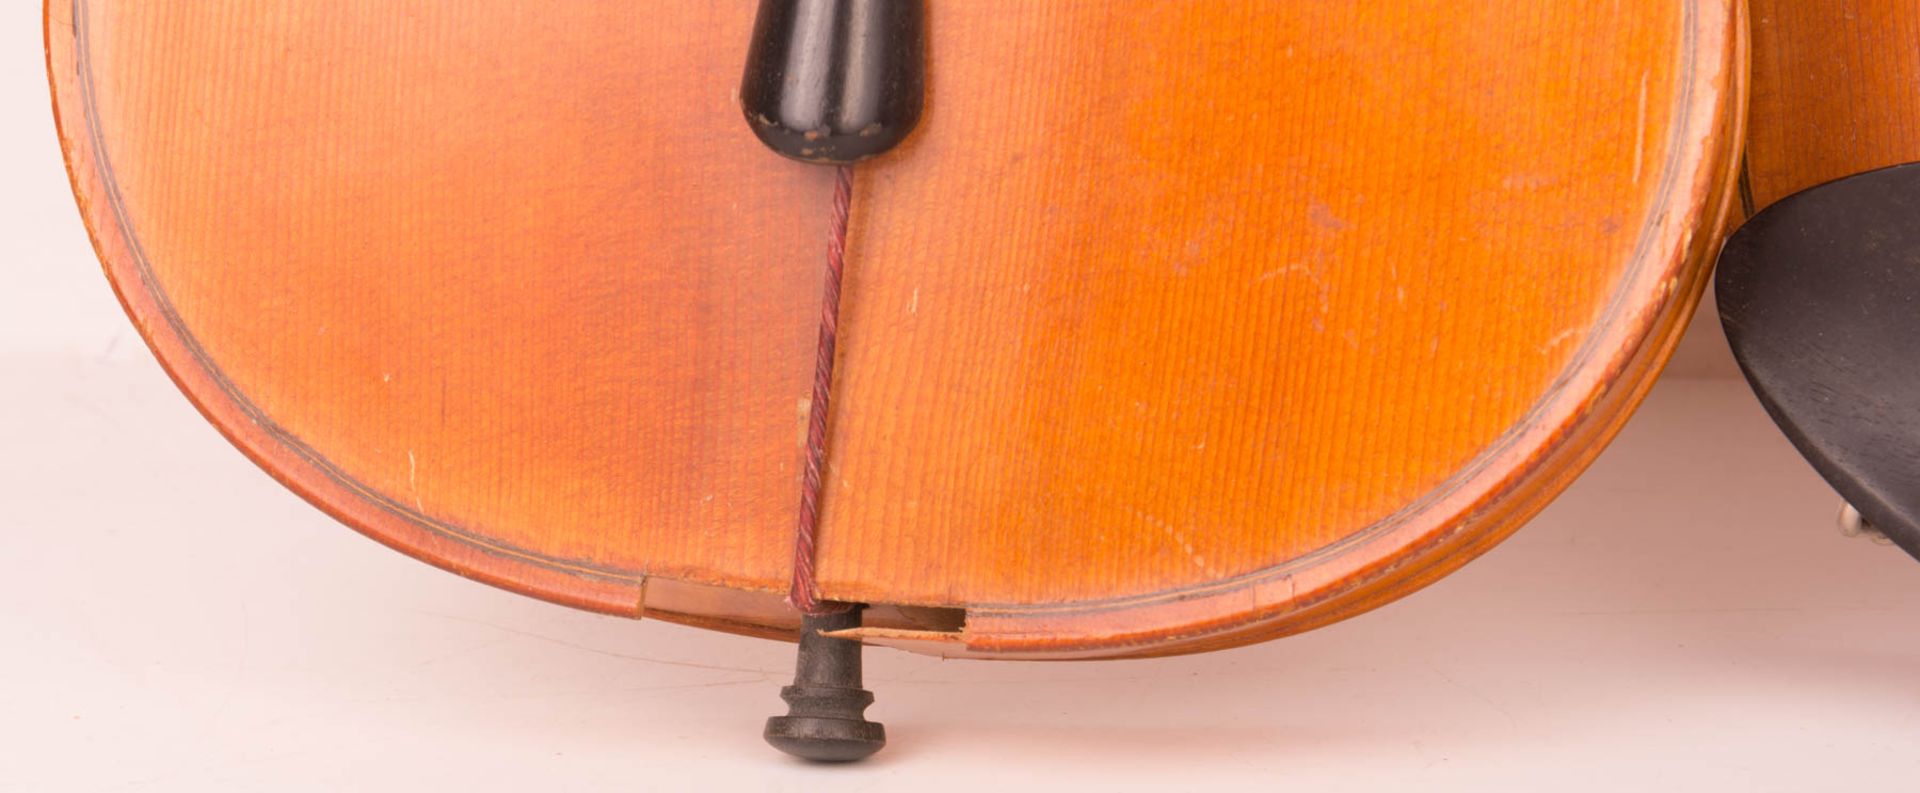 Two violins, Aubert Mirecourt, beginning of the 20th century. - Image 2 of 8